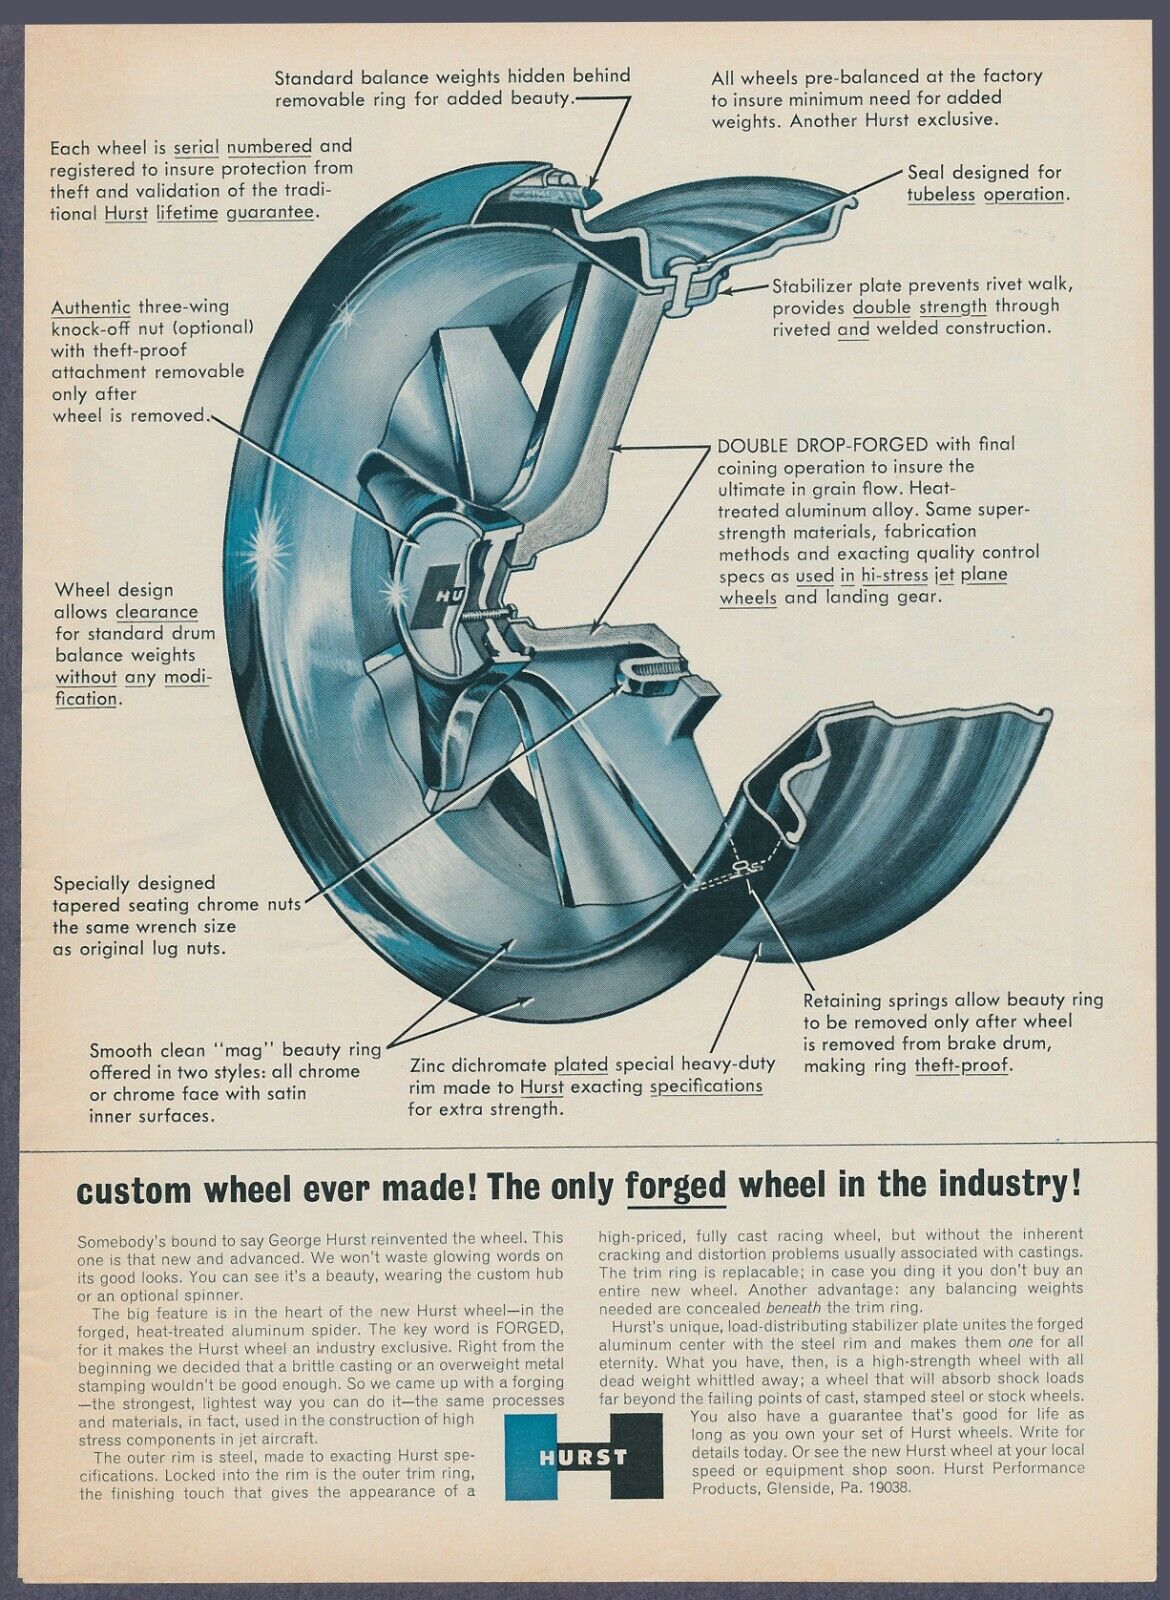 Hurst Forged Custom Wheels Mags Cutaway Vintage Print Ad February 1965